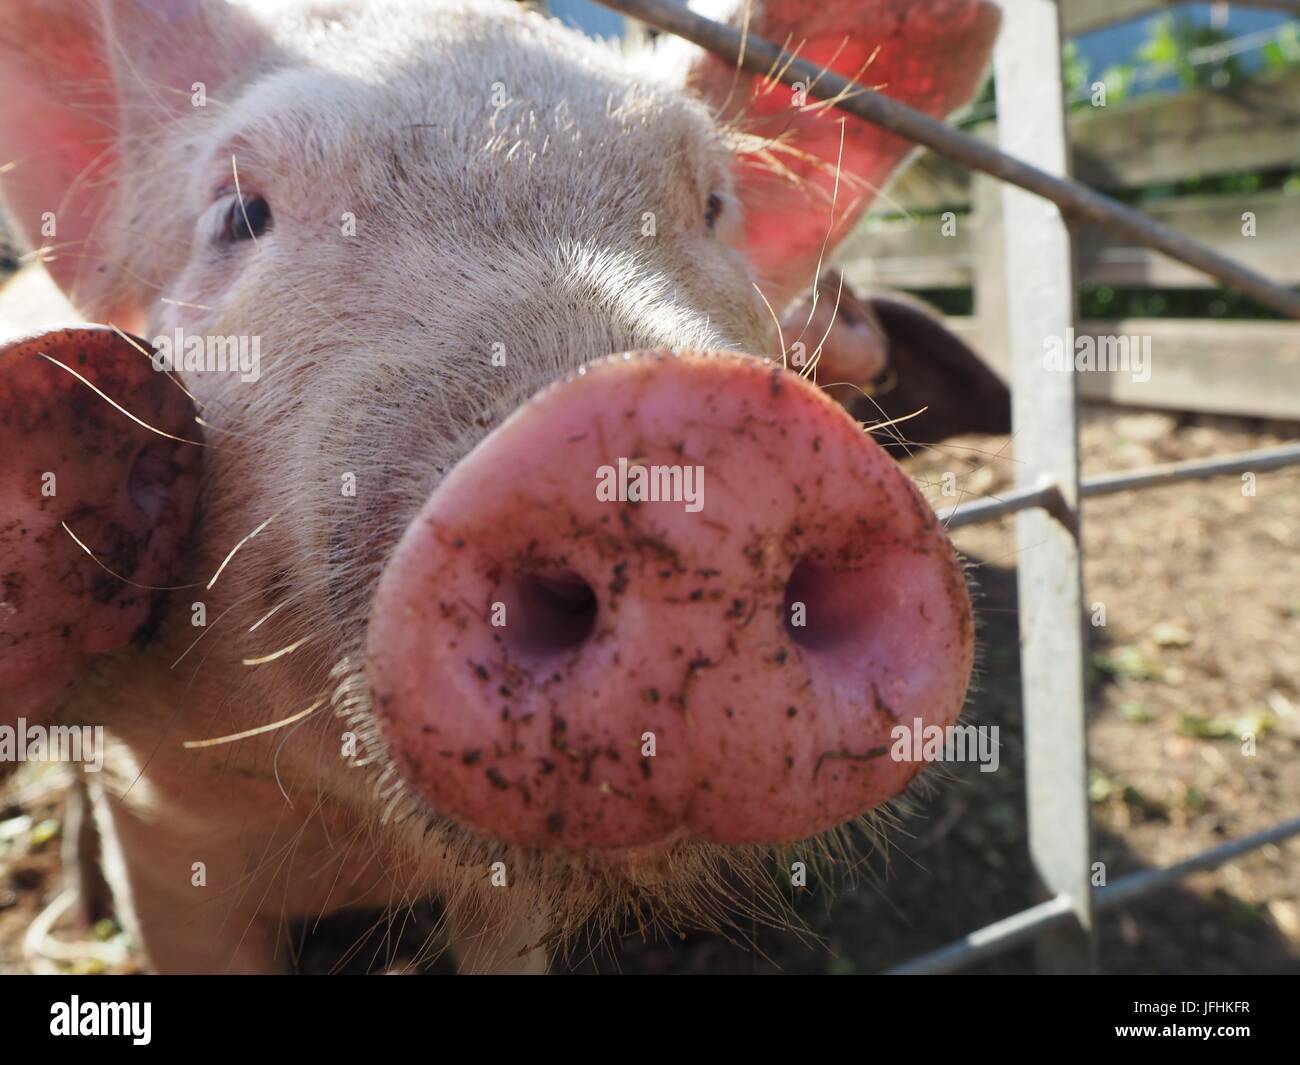 pig nose close up Stock Photo